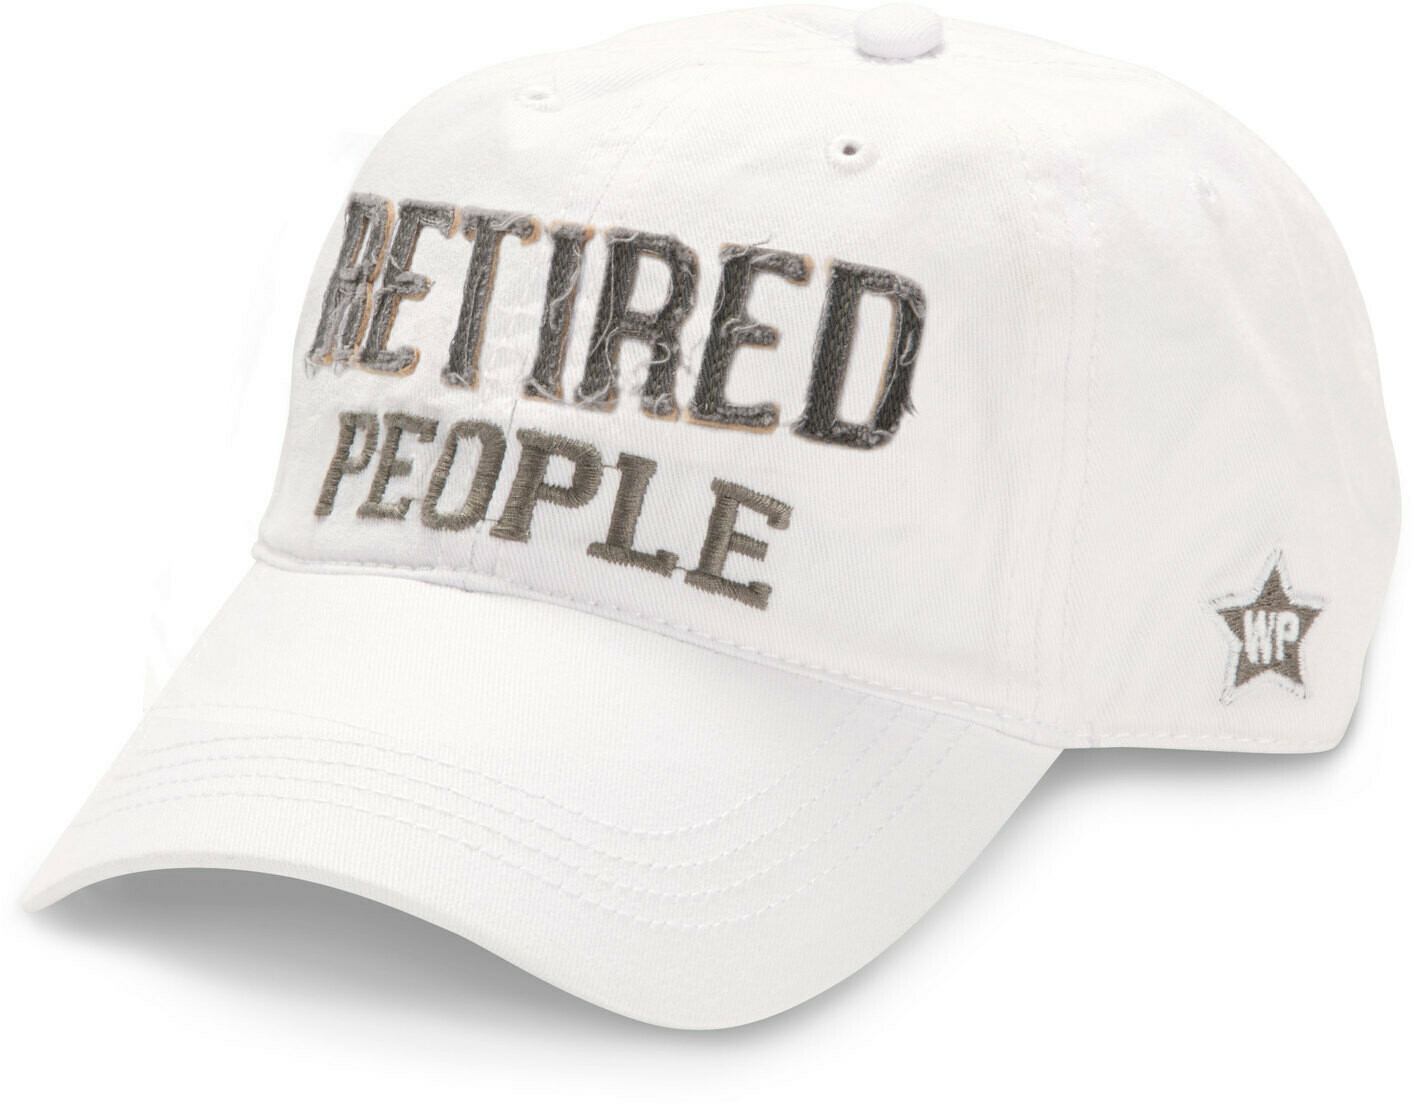 Retire People White Hat